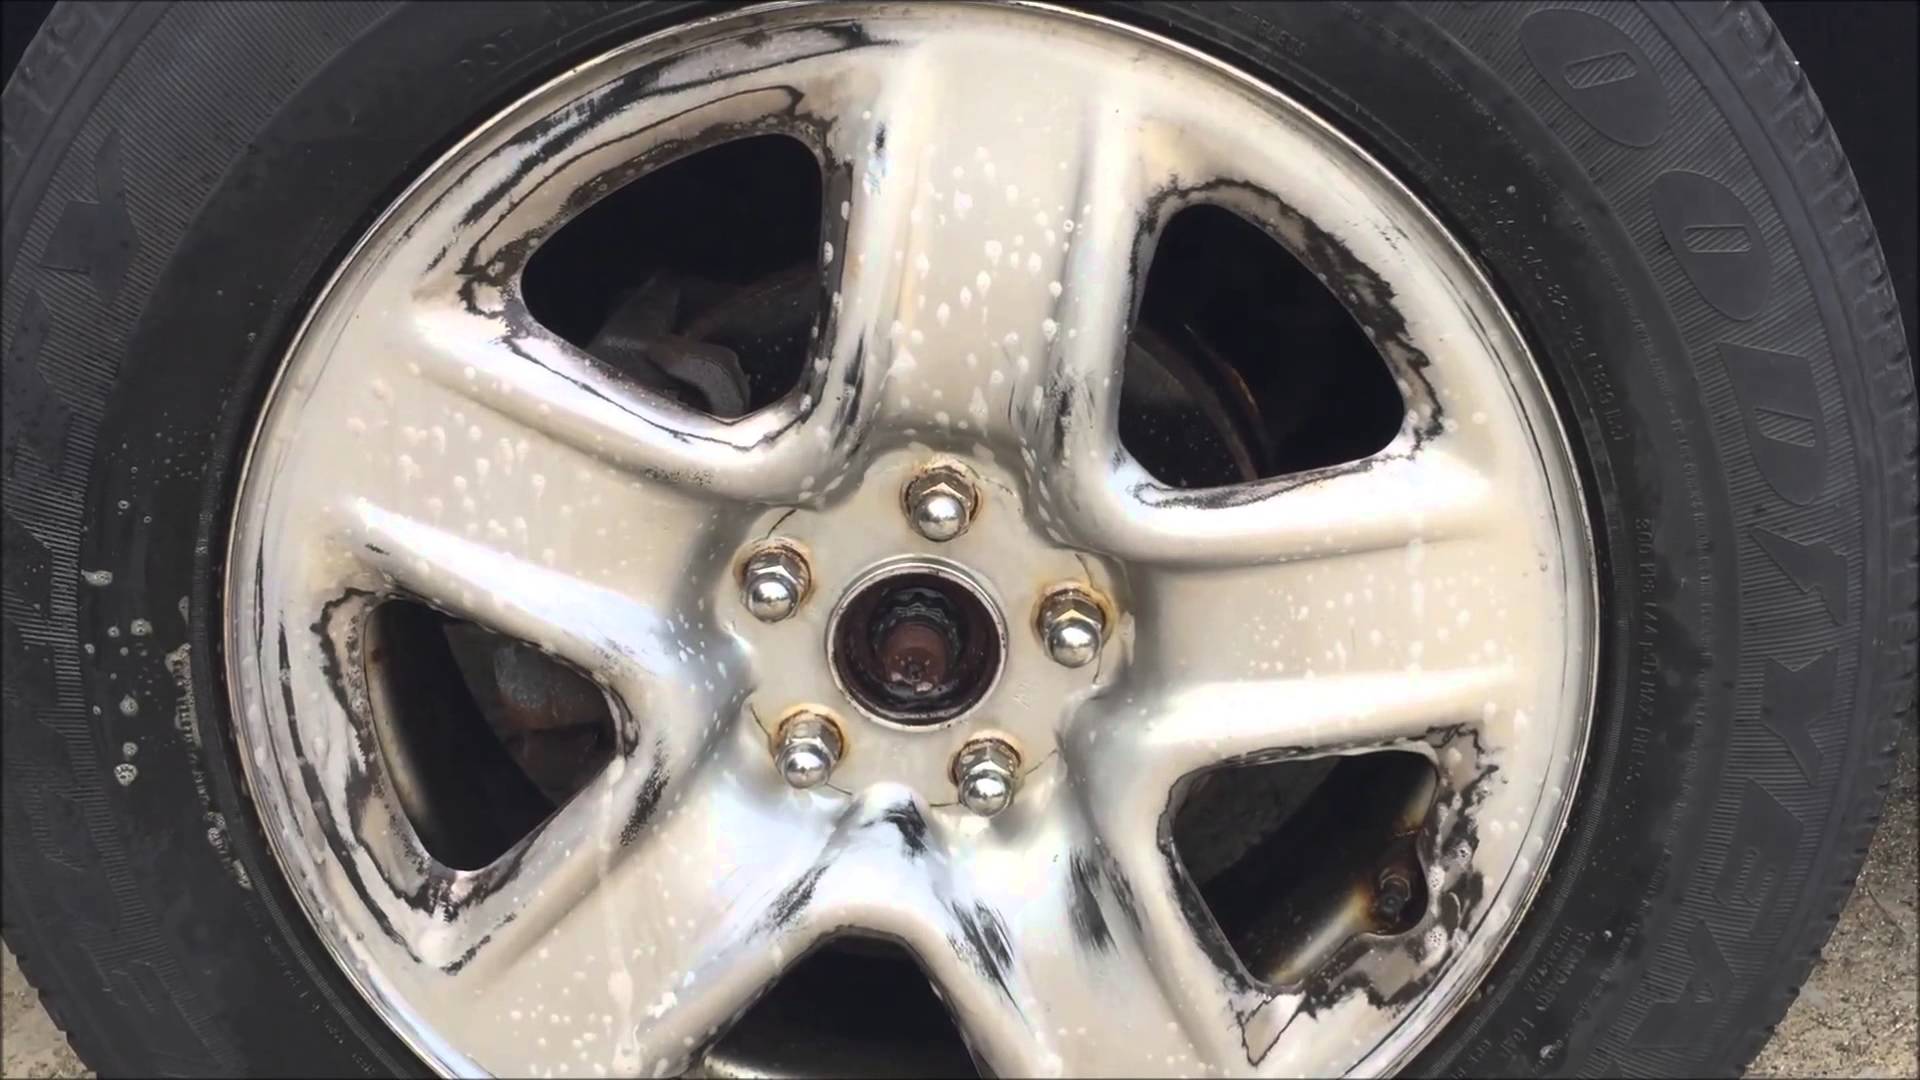 How to refinish repair rusted wheel rim - YouTube